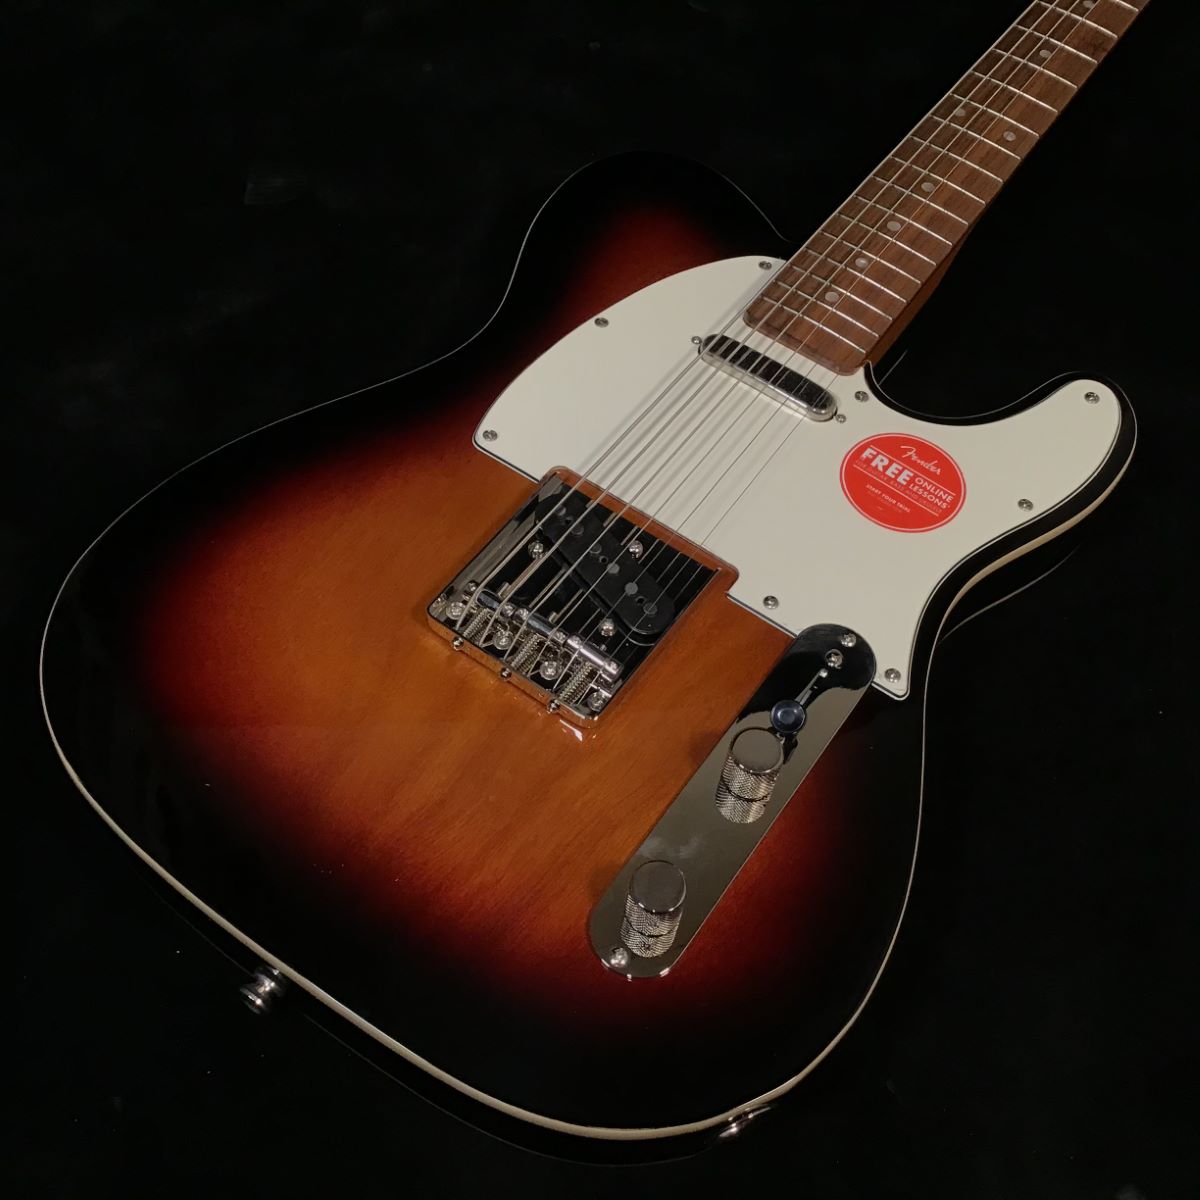 Squier by Fender Classic Vibe Baritone Custom Telecaster エレキ ...